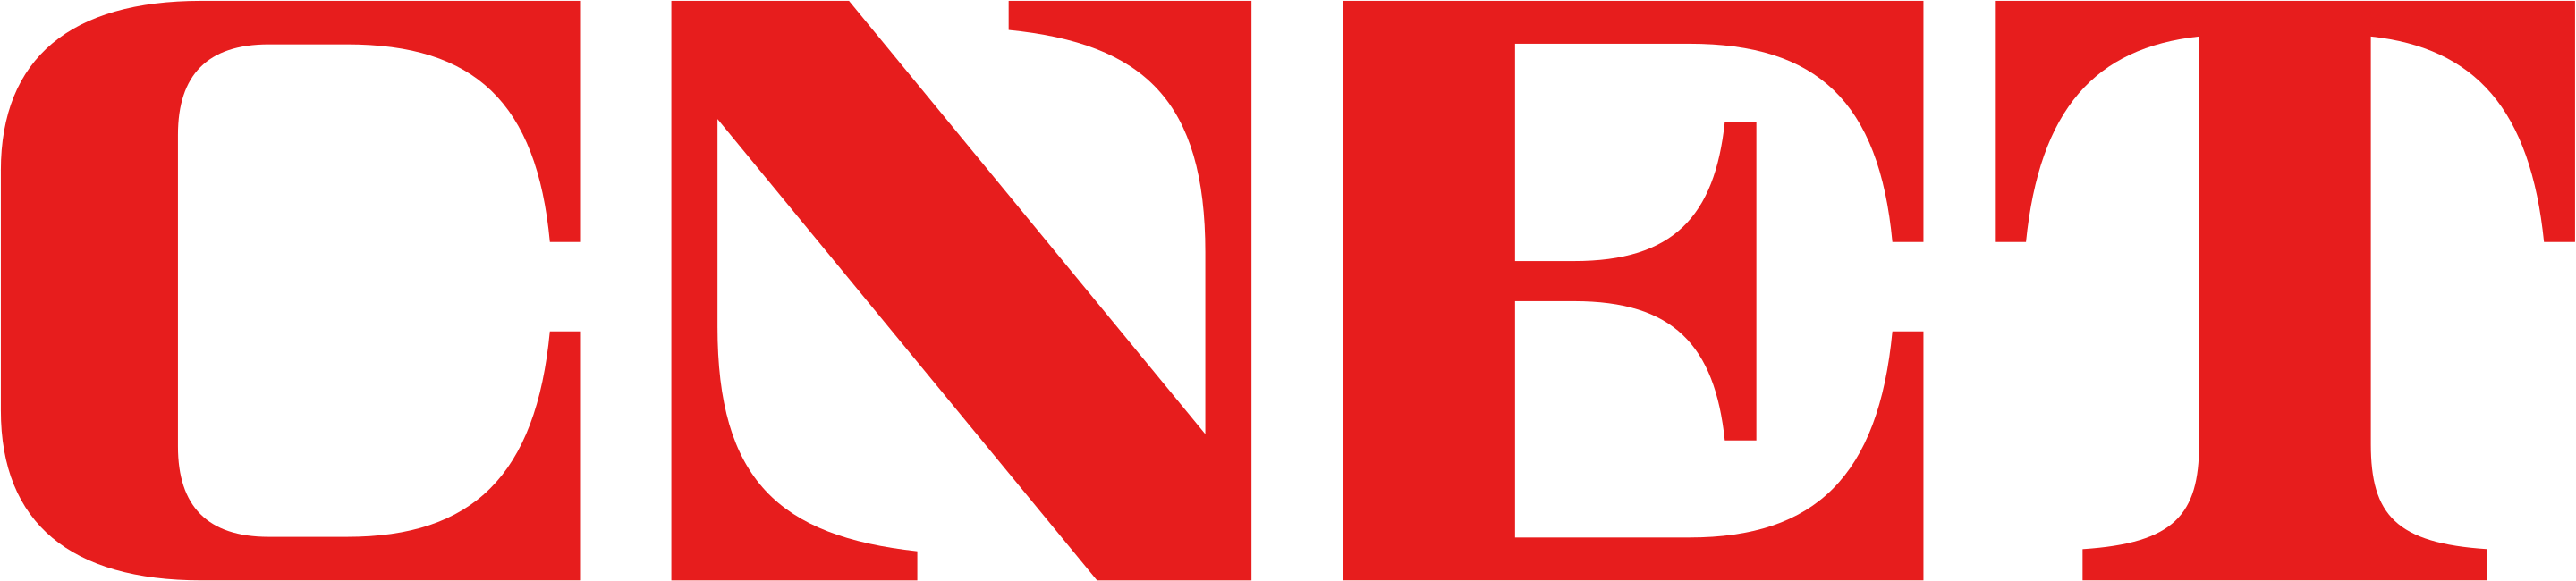 CNET Networks - CNET News